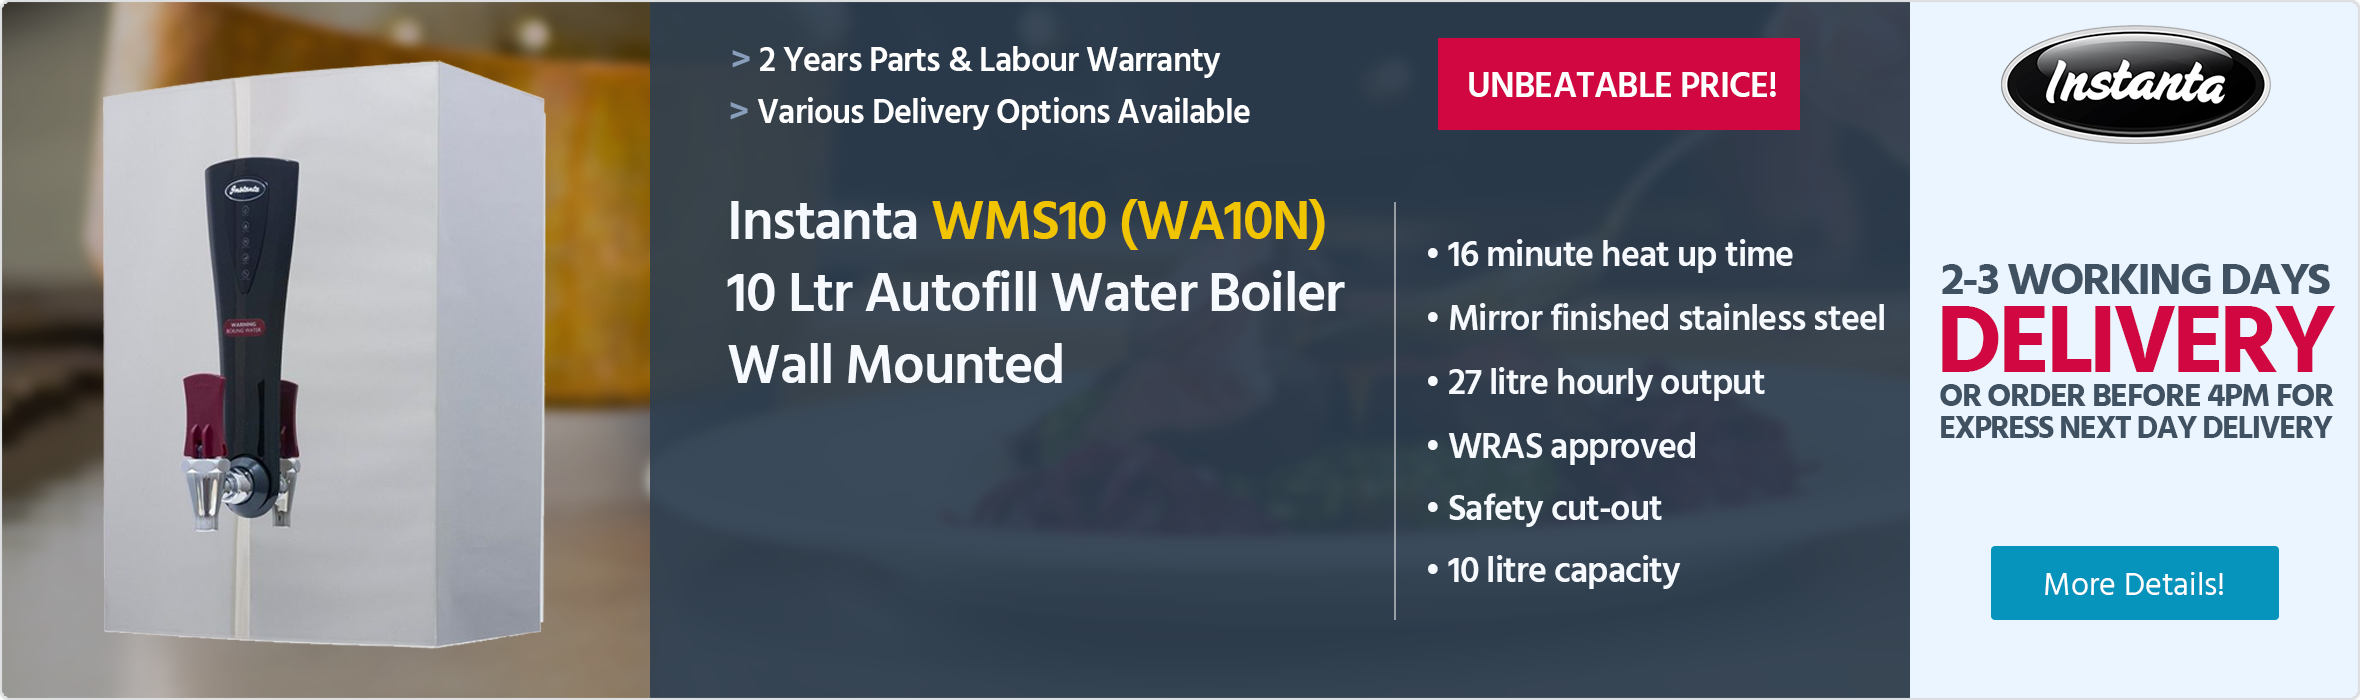 Instanta WMS10 (WA10N) 10 Ltr Autofill Water Boiler Wall Mounted